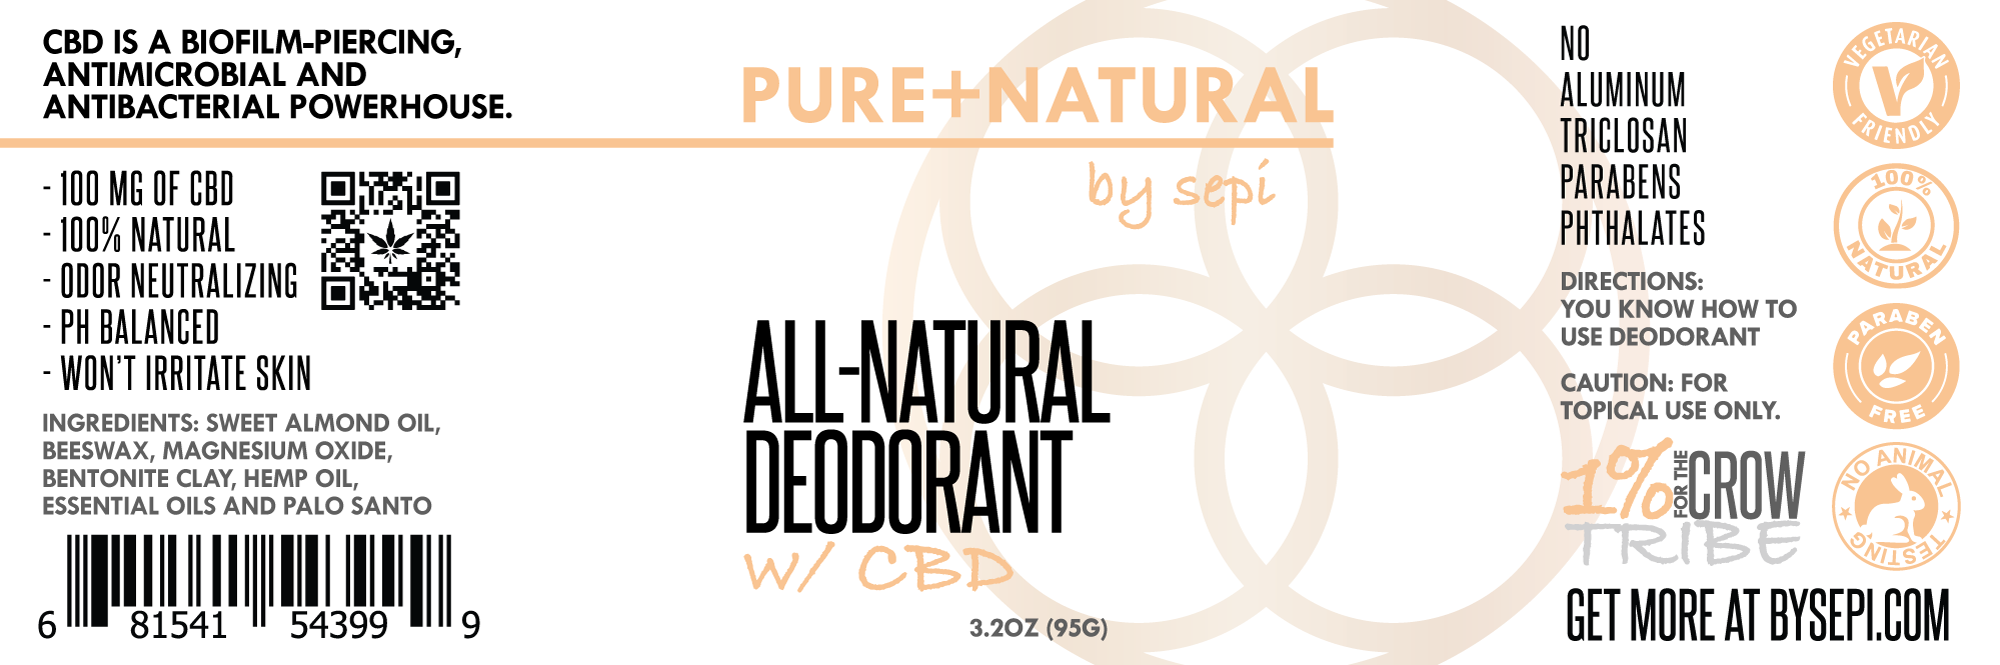 CBD All-Natural Deodorant